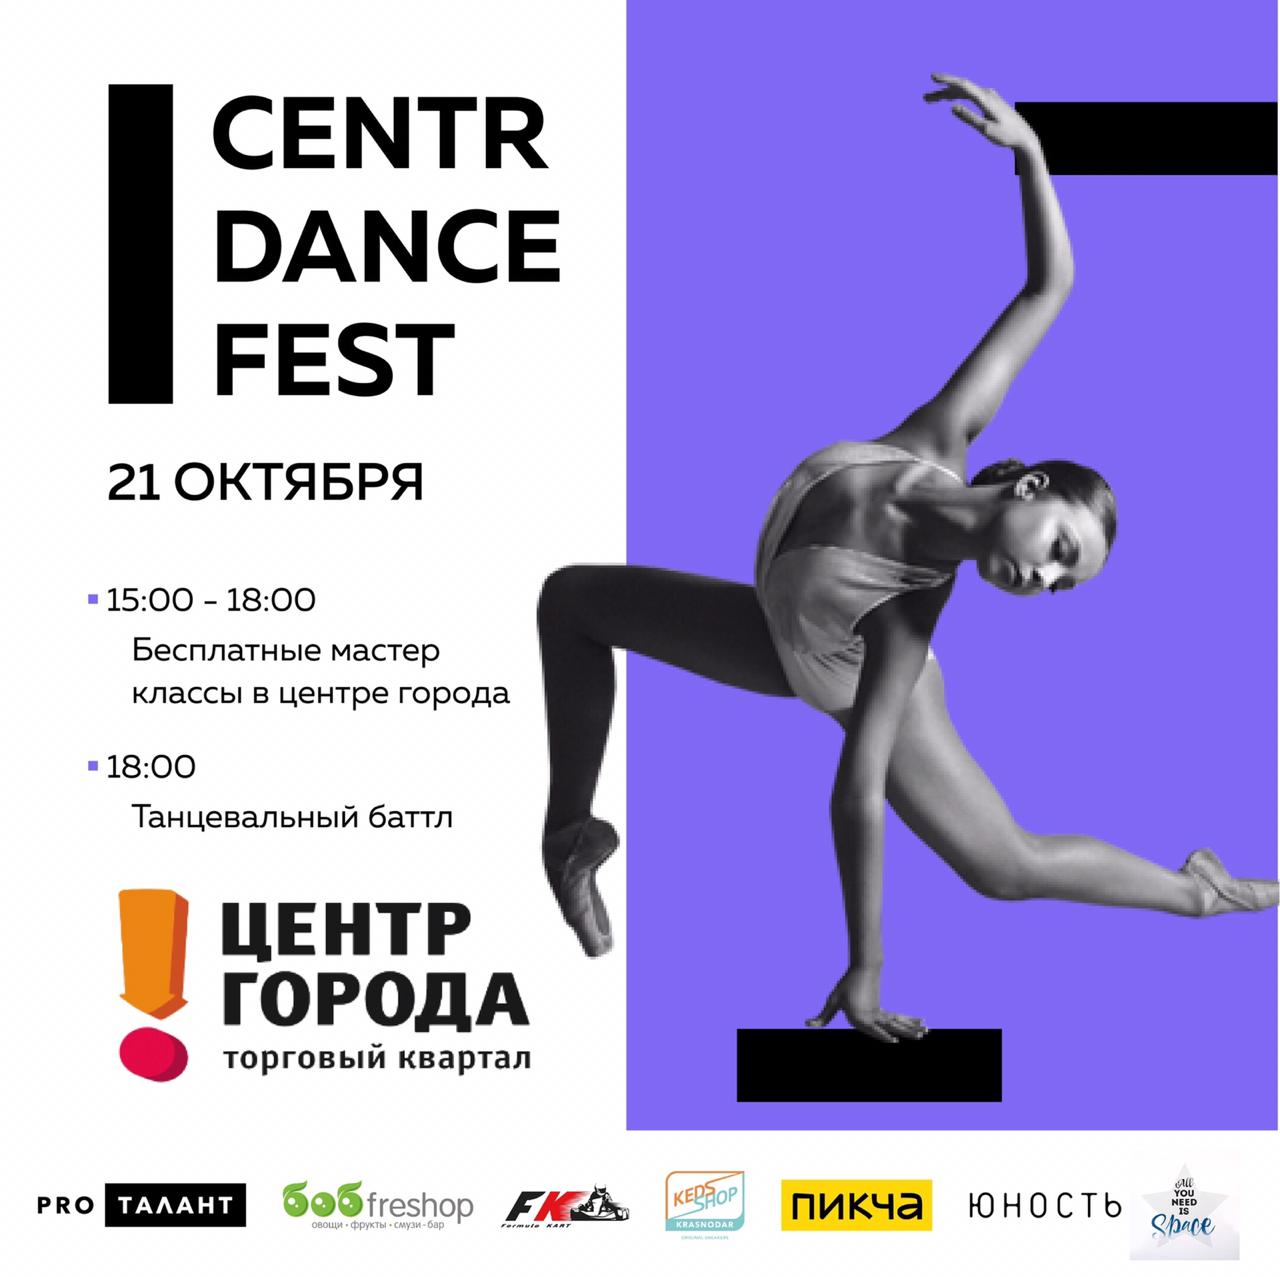 Centr Dance Fest в "Центре Города"!